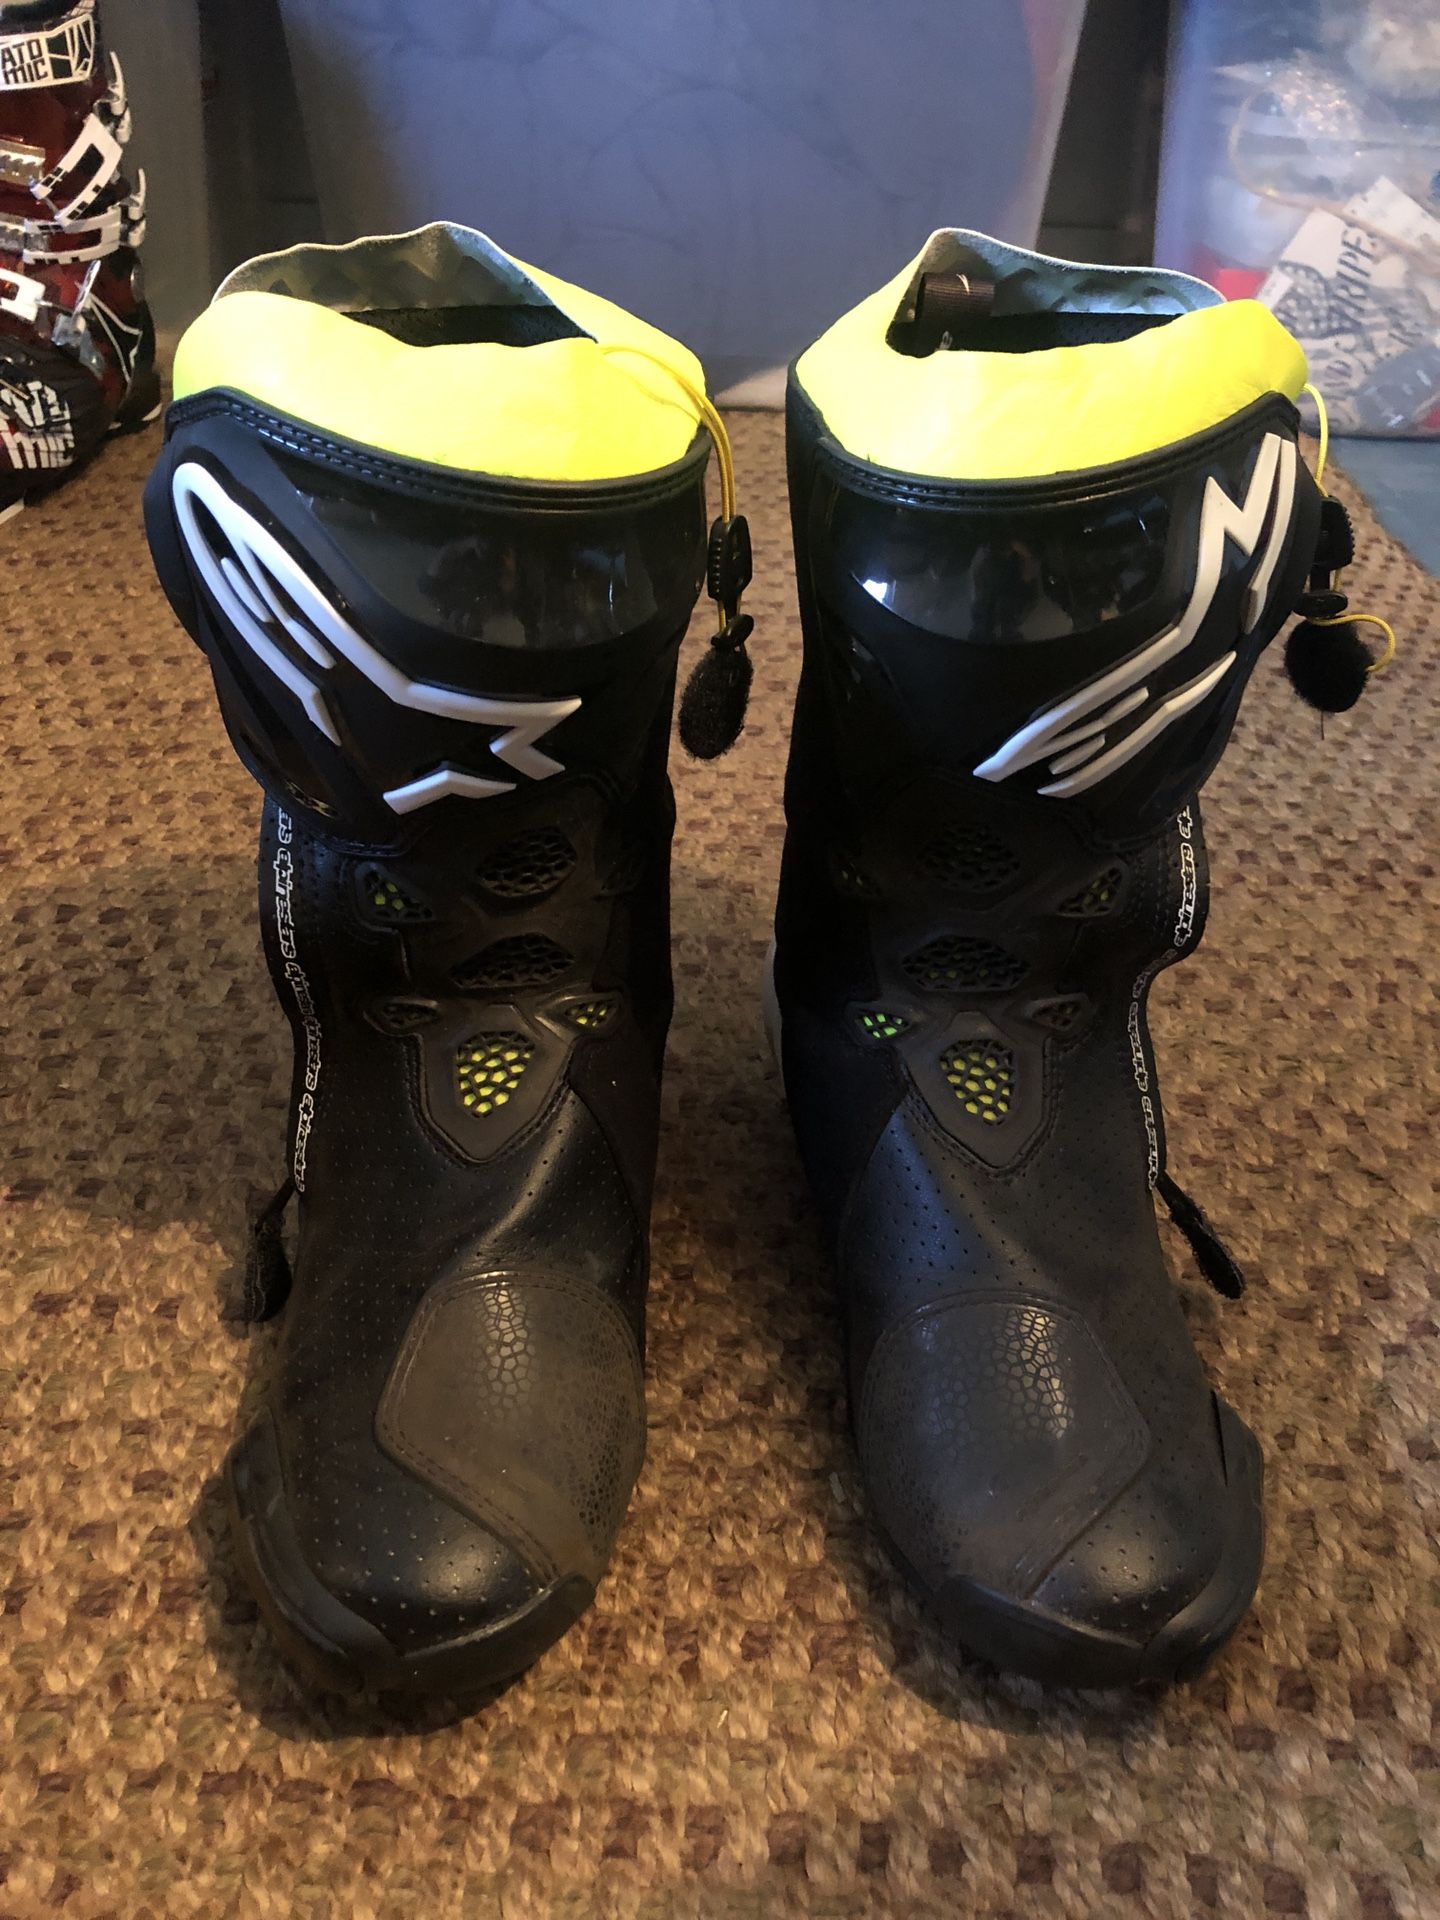 Alpinestars Supertech-R motorcycle racing boots